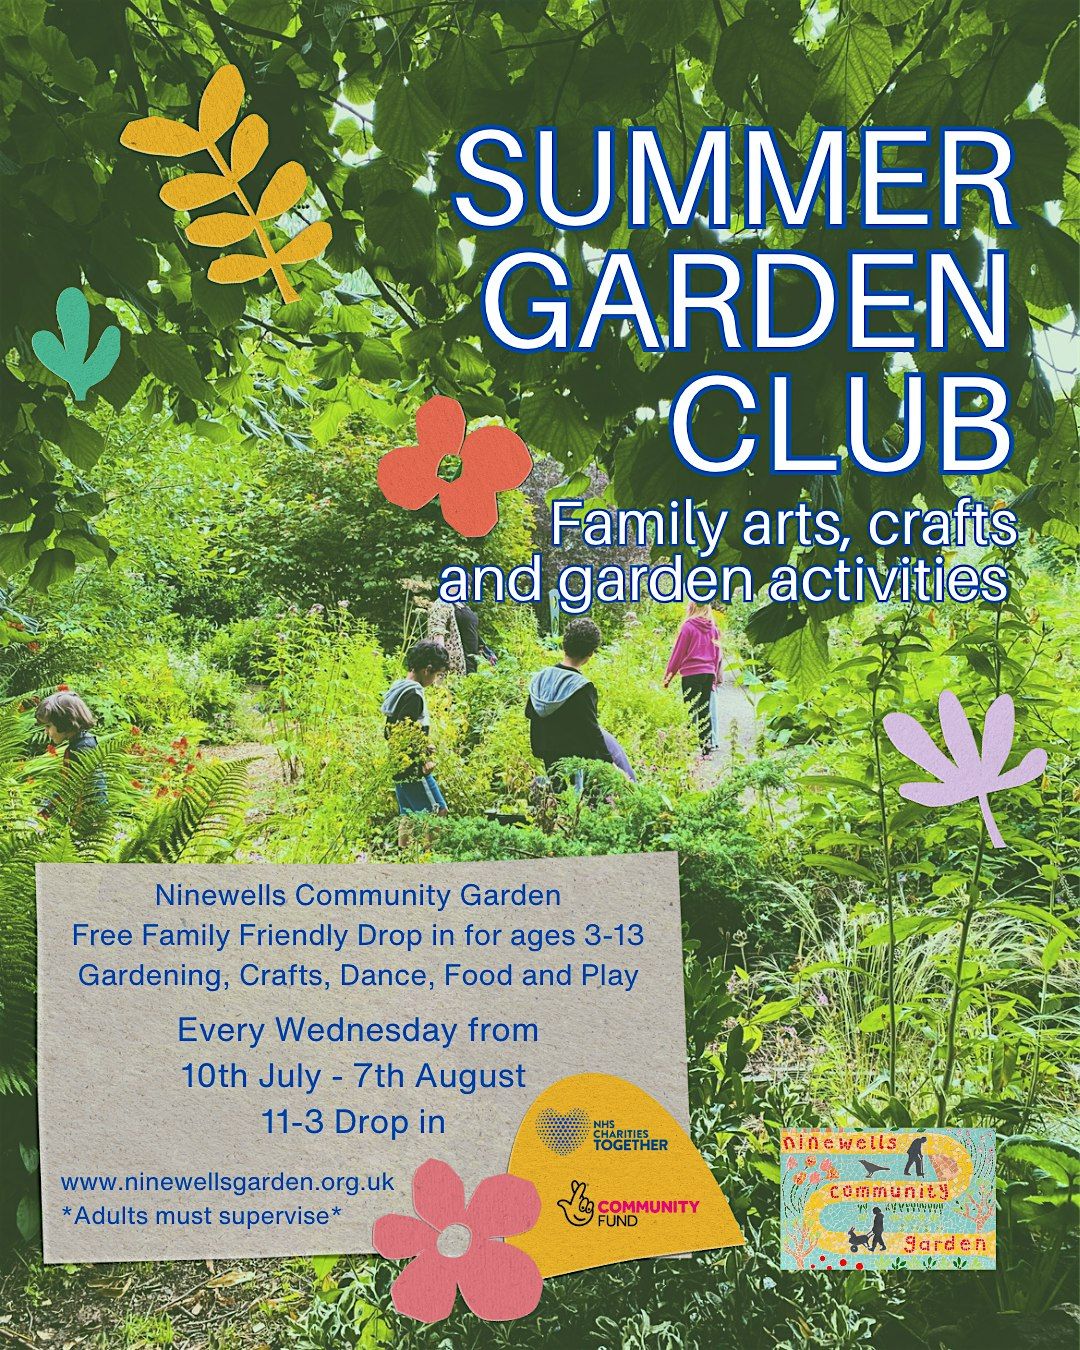 Summer Garden Club - Ninewells Community Garden